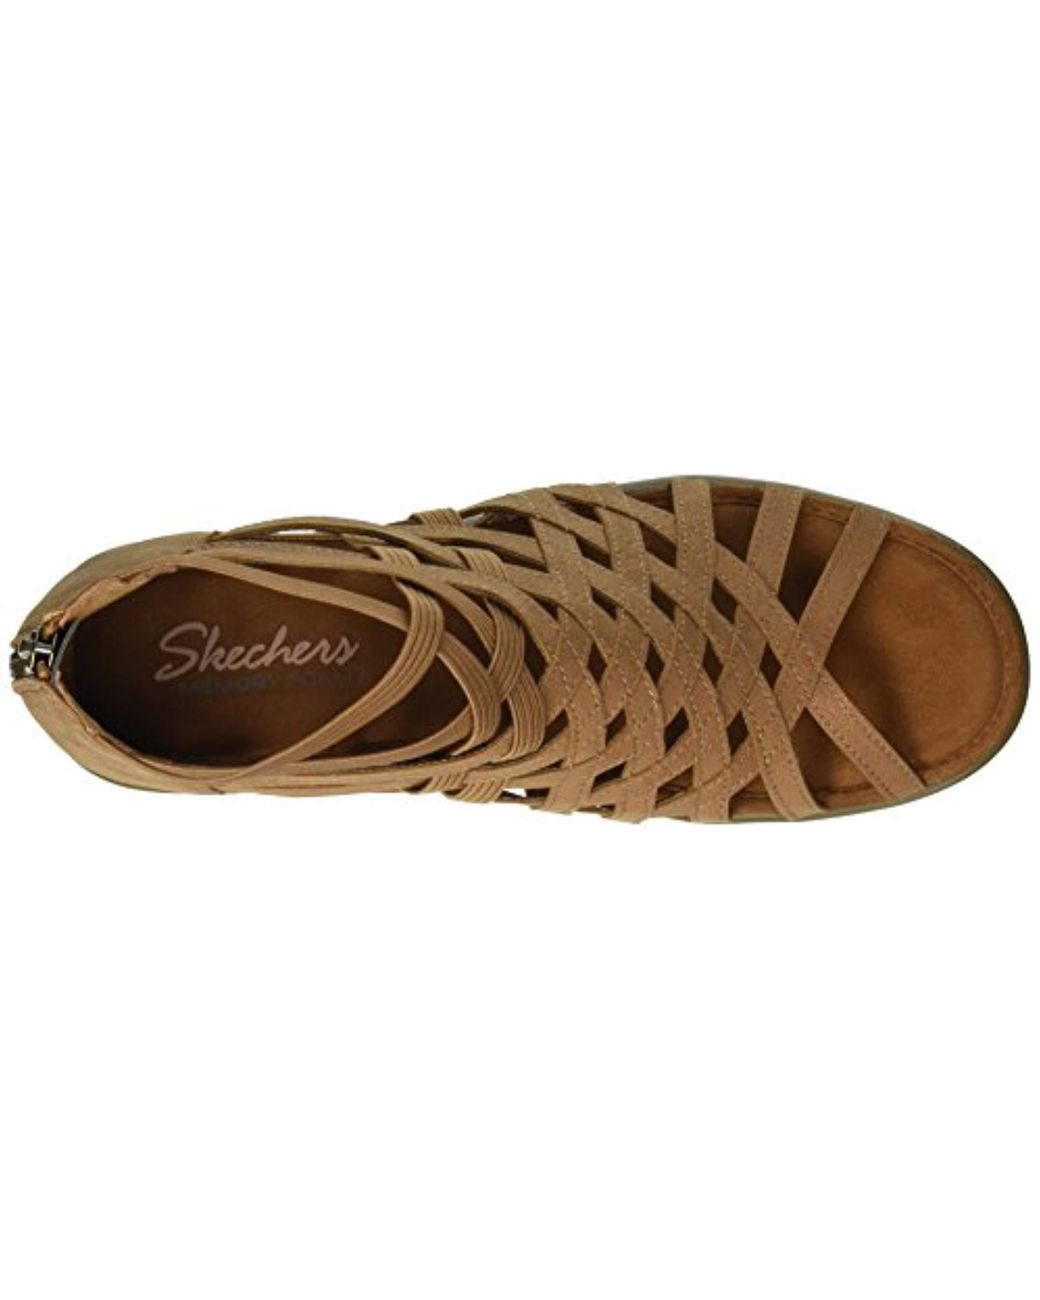 Skechers Parallel-dream Queen Wedge Sandal in Brown | Lyst